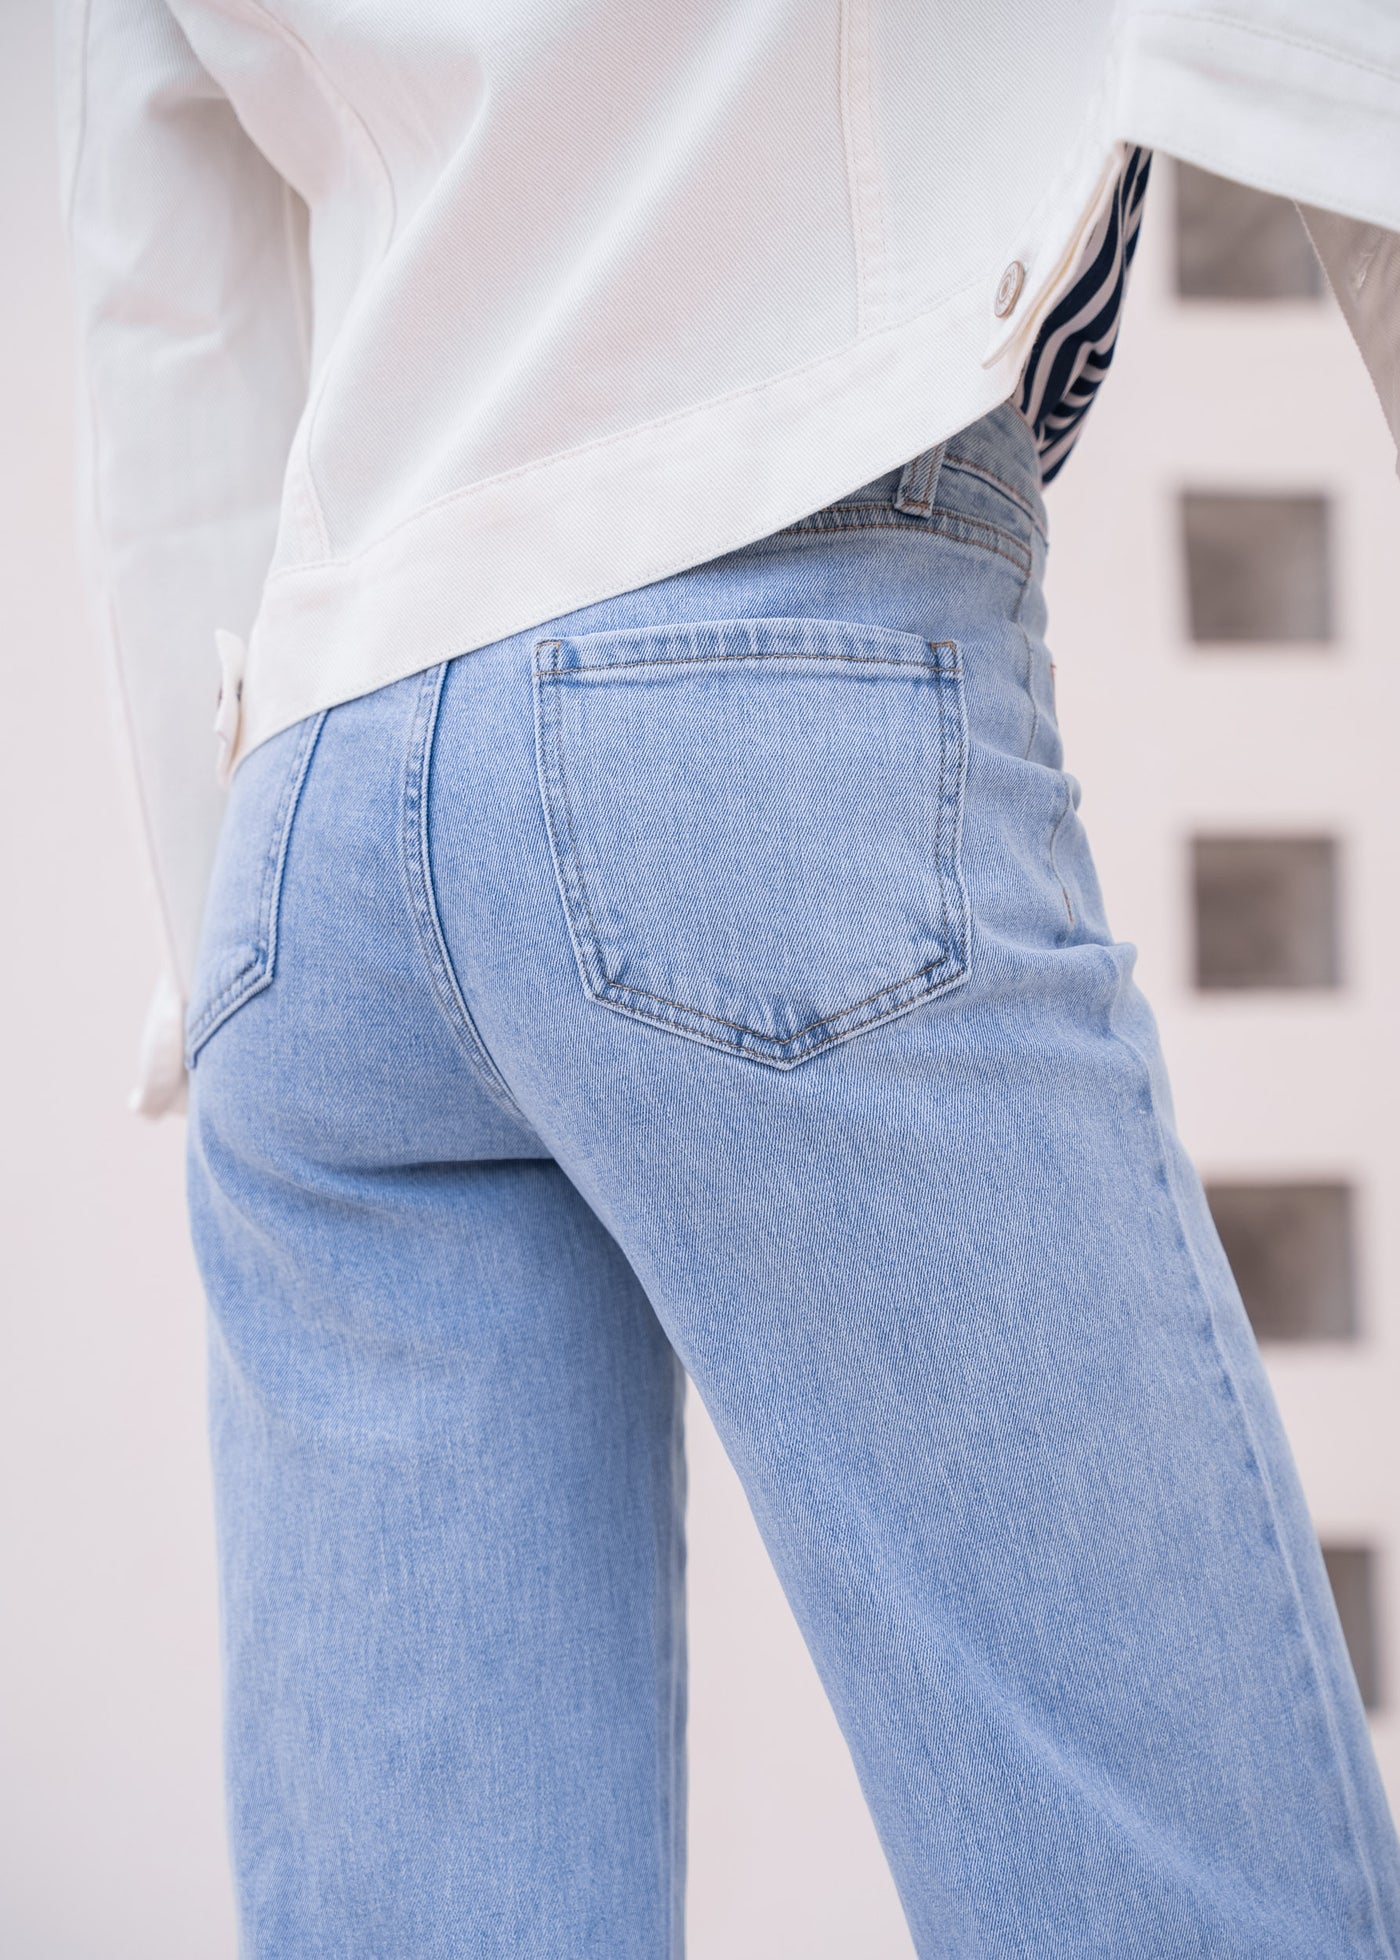 Oraje Panel Bottom Jeans